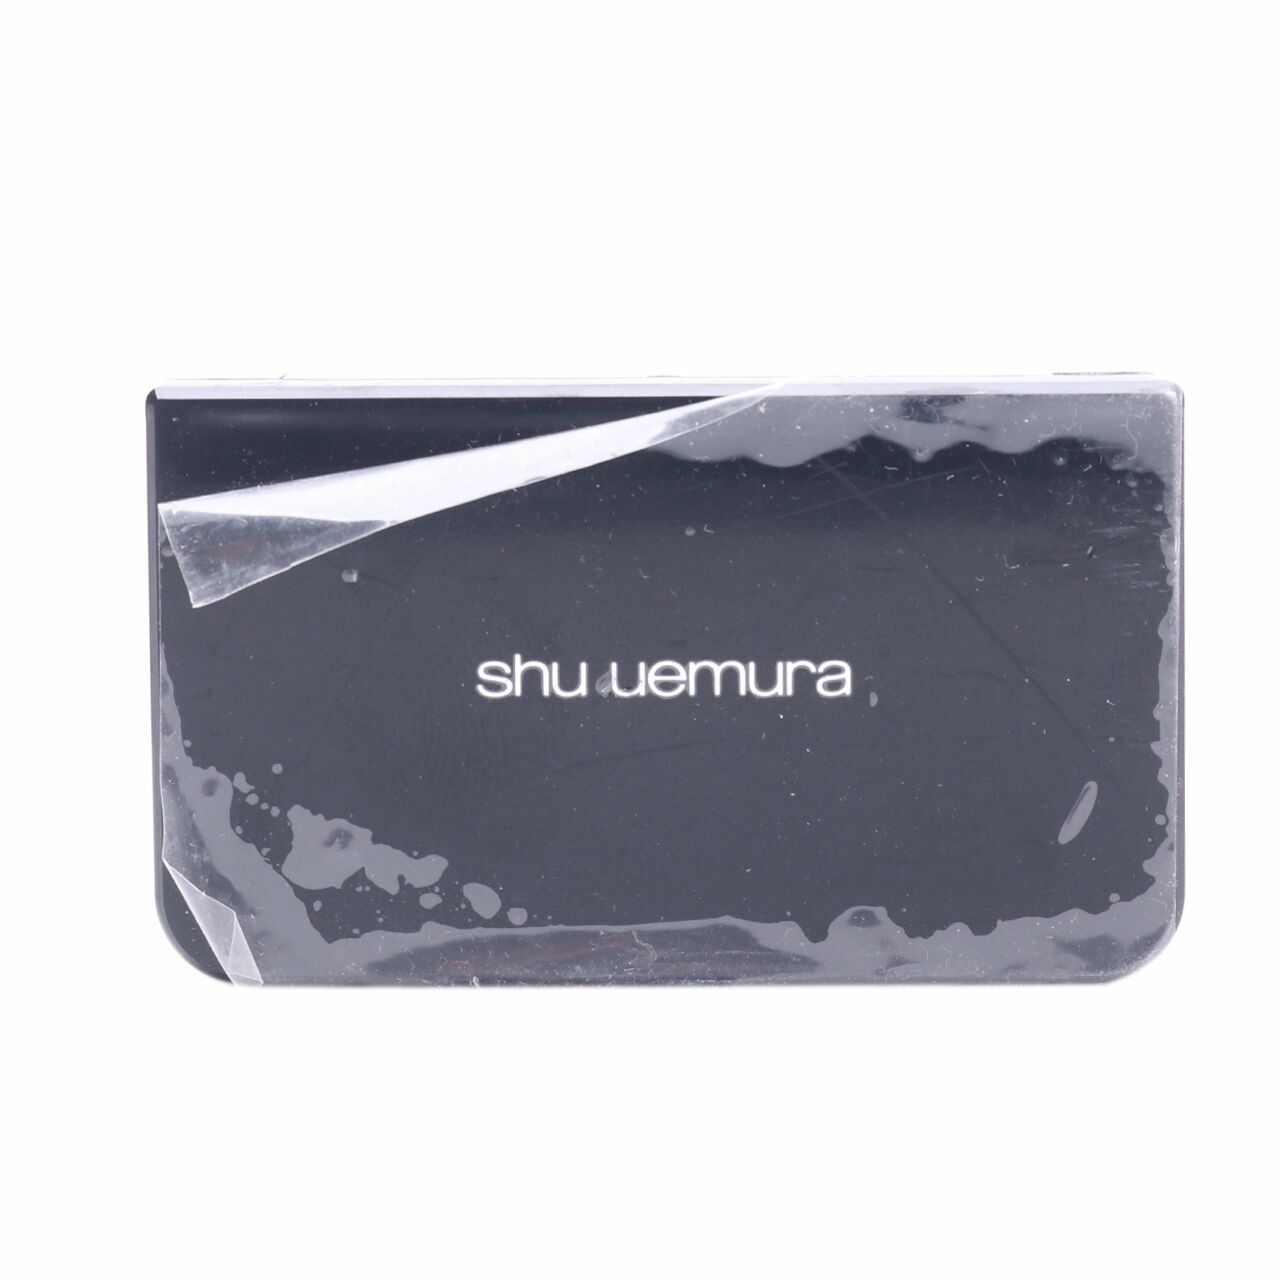 Shu Uemura Multi-Concealer Palette Set and Palette